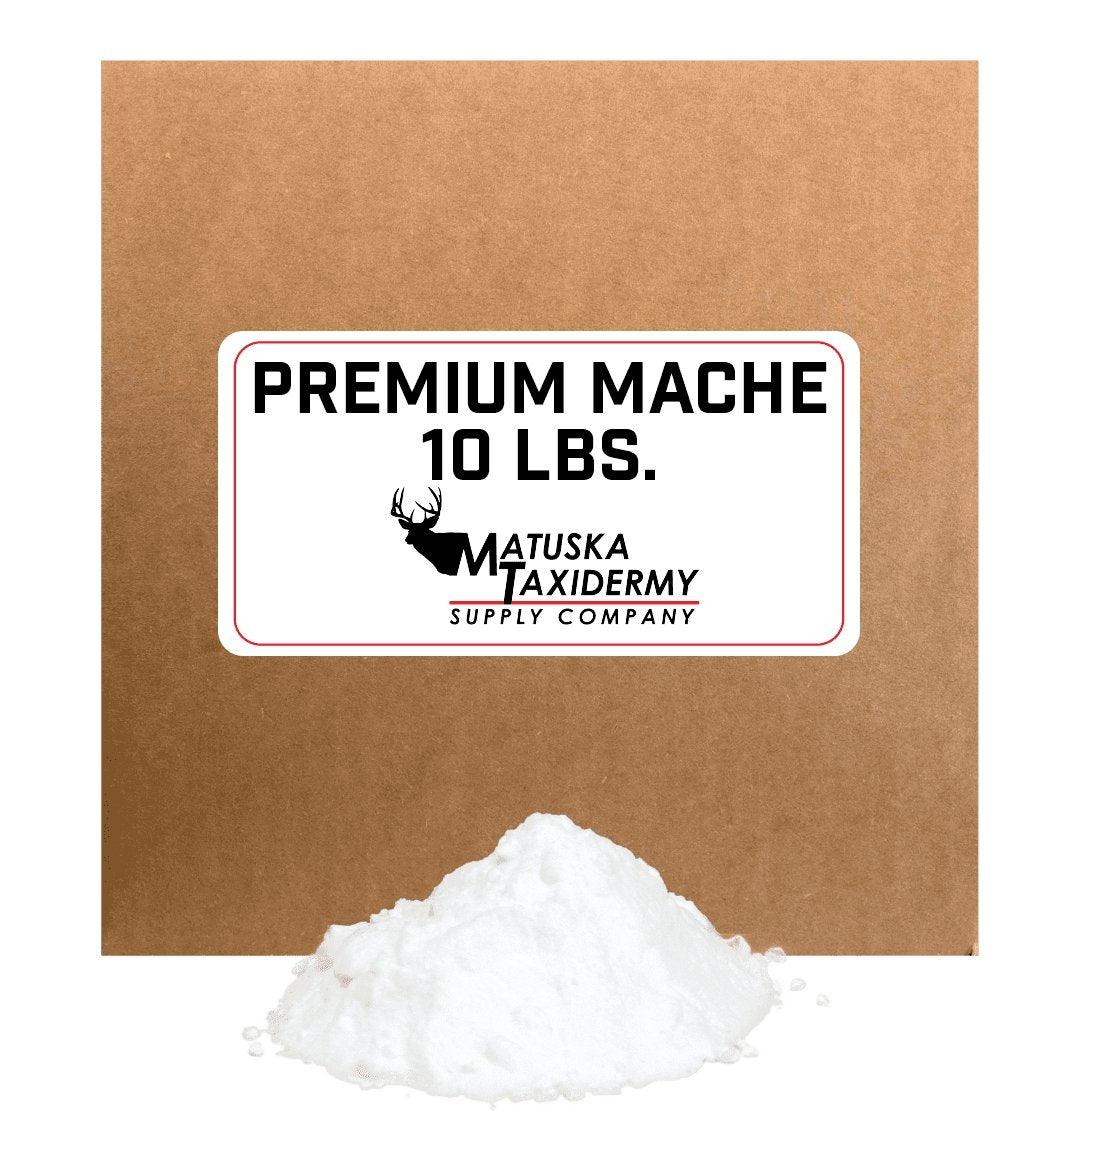 Mache (Premium) - Matuska Taxidermy Supply Company